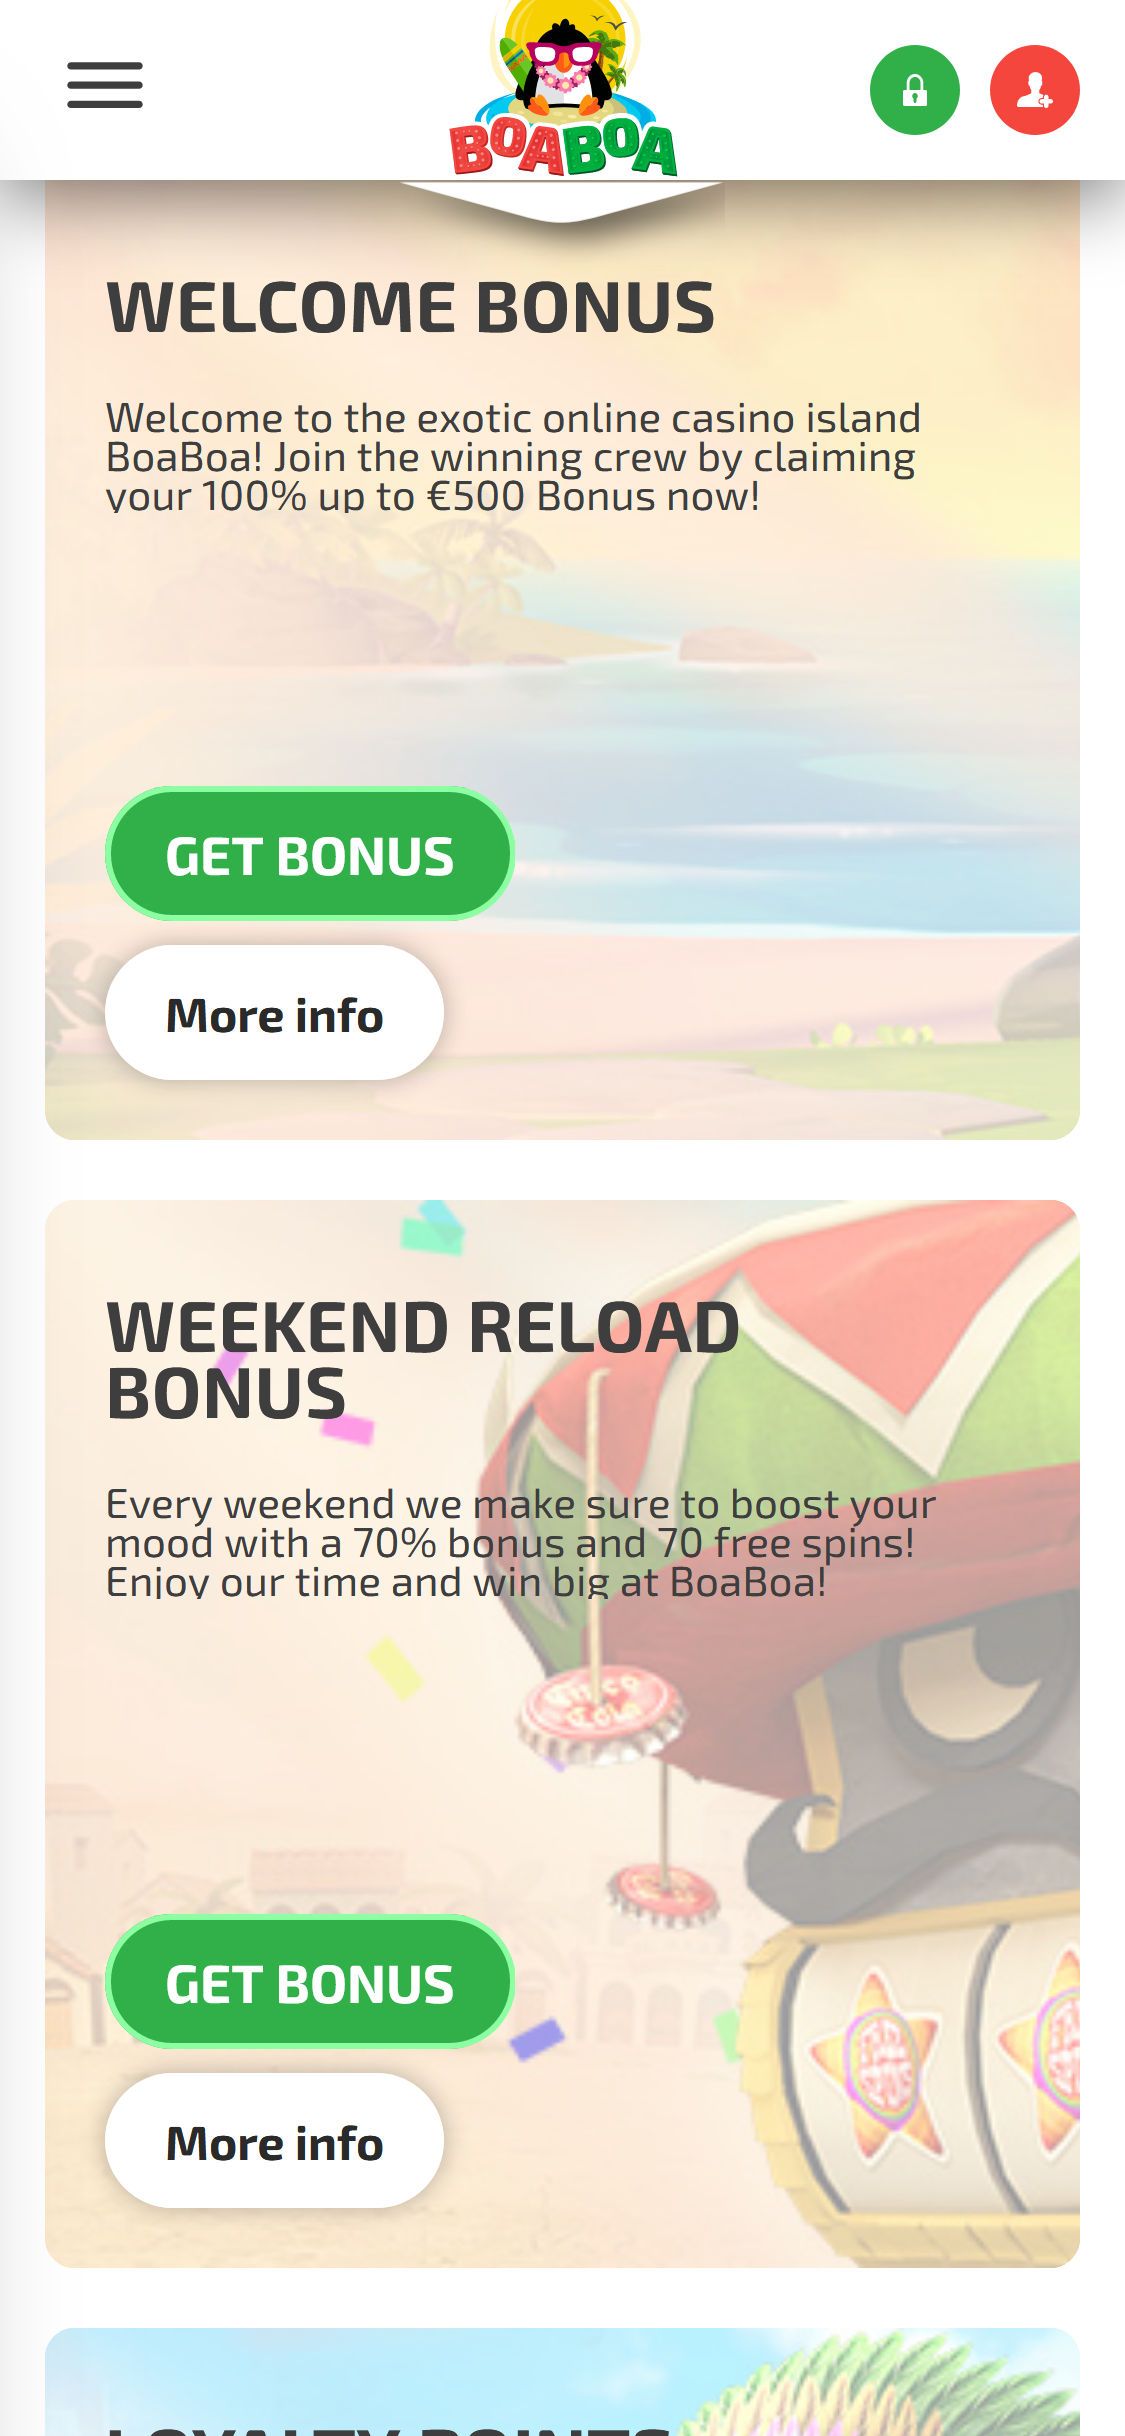 BoaBoa Casino Mobile No Deposit Bonus Review